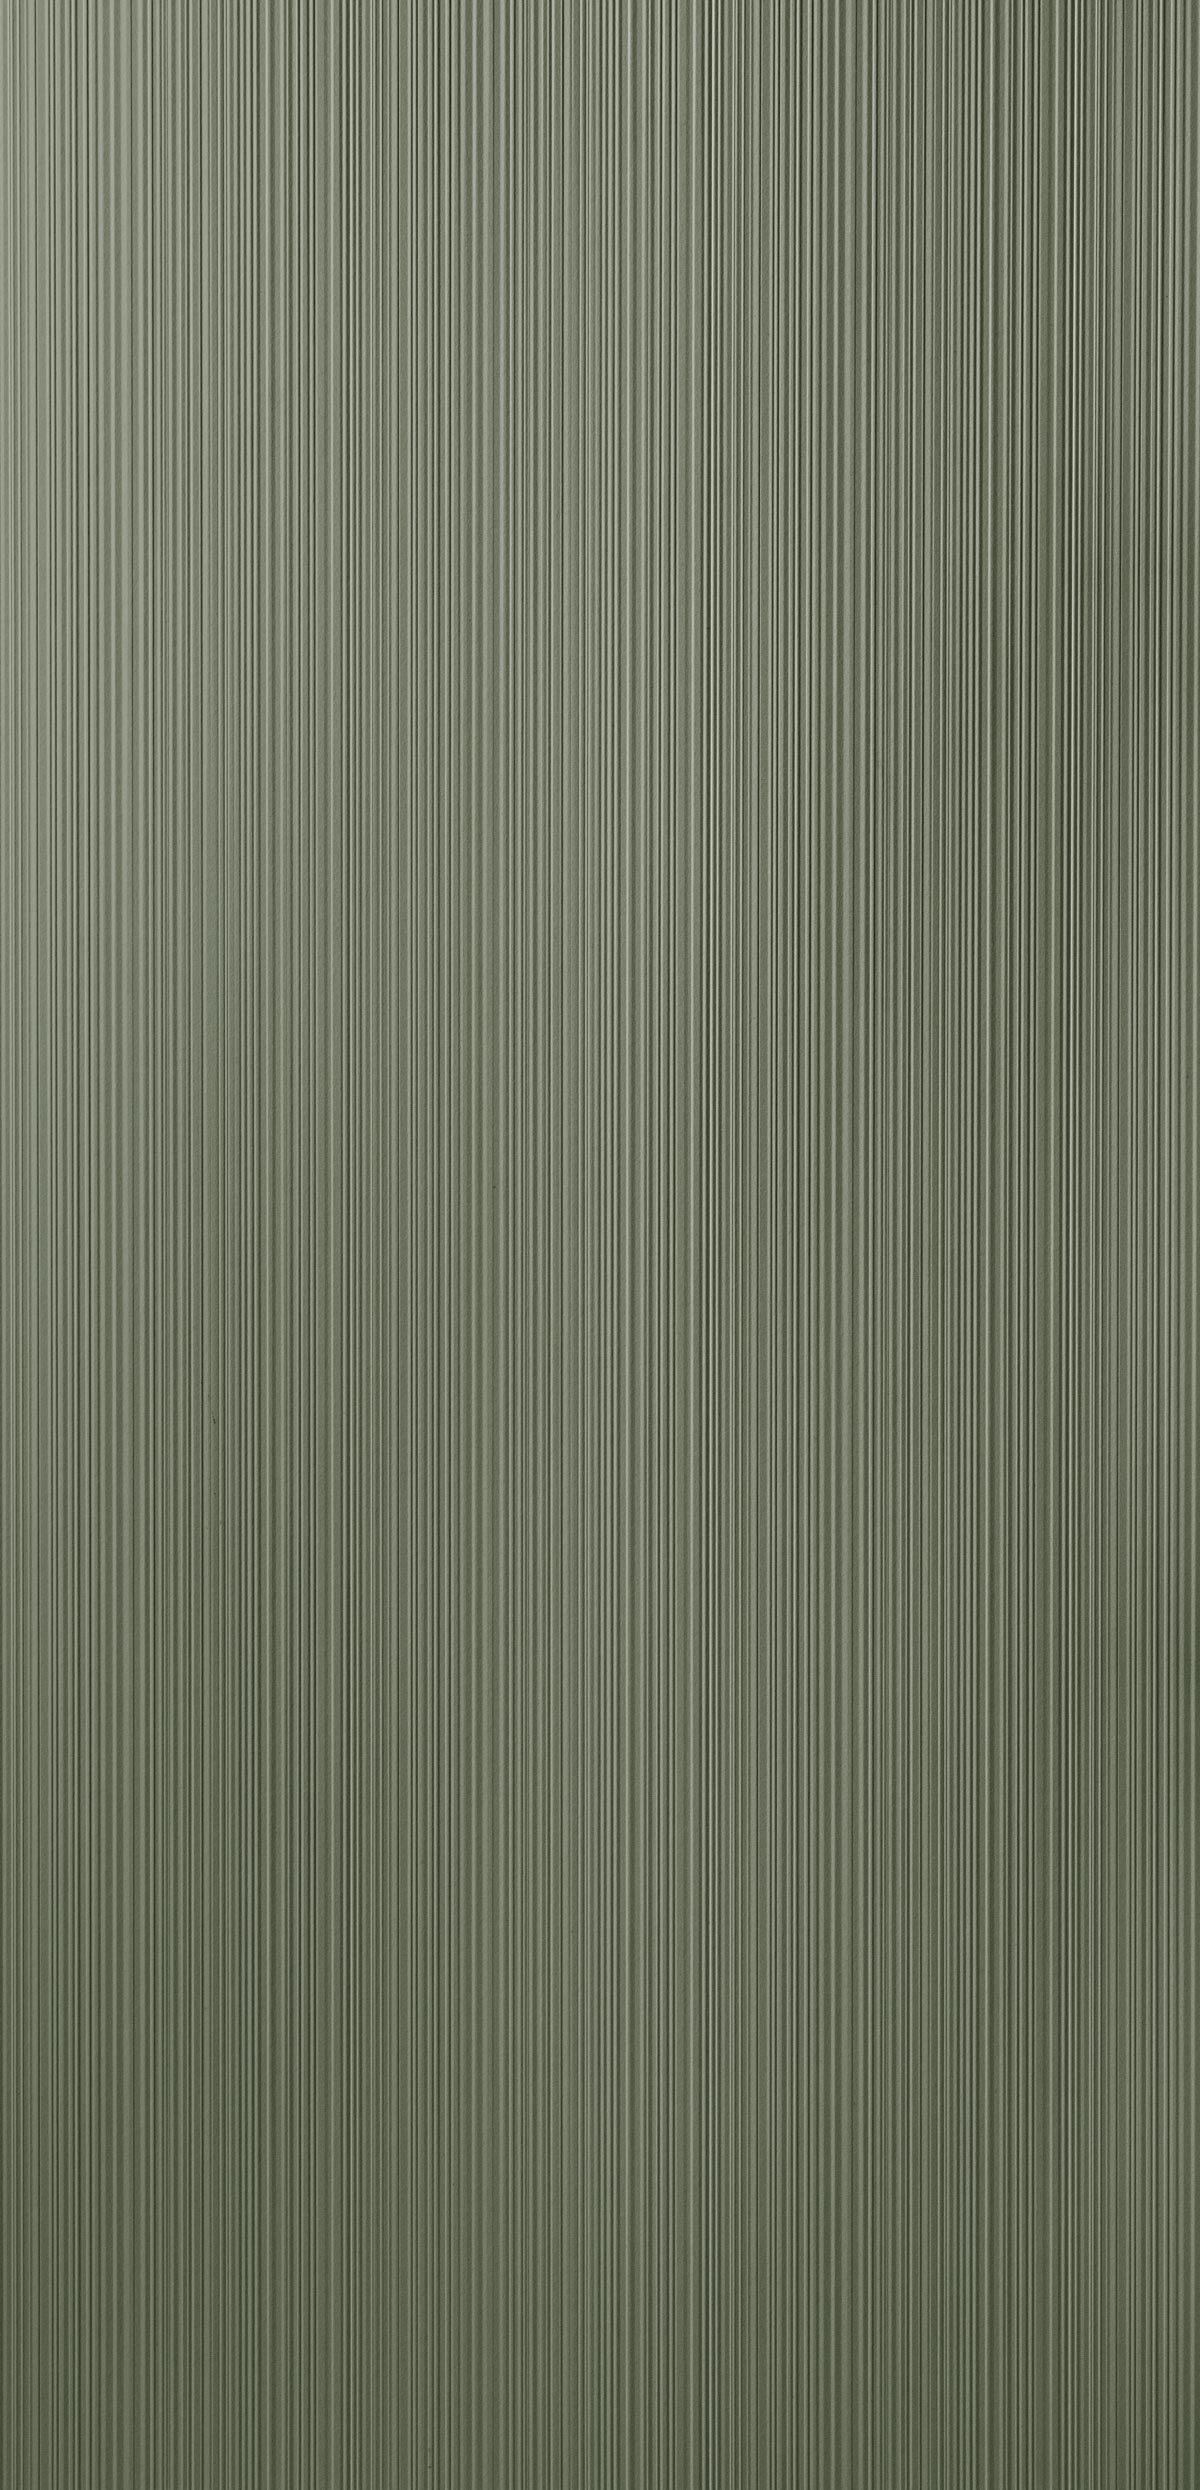 Lines Dark olive 017-panel